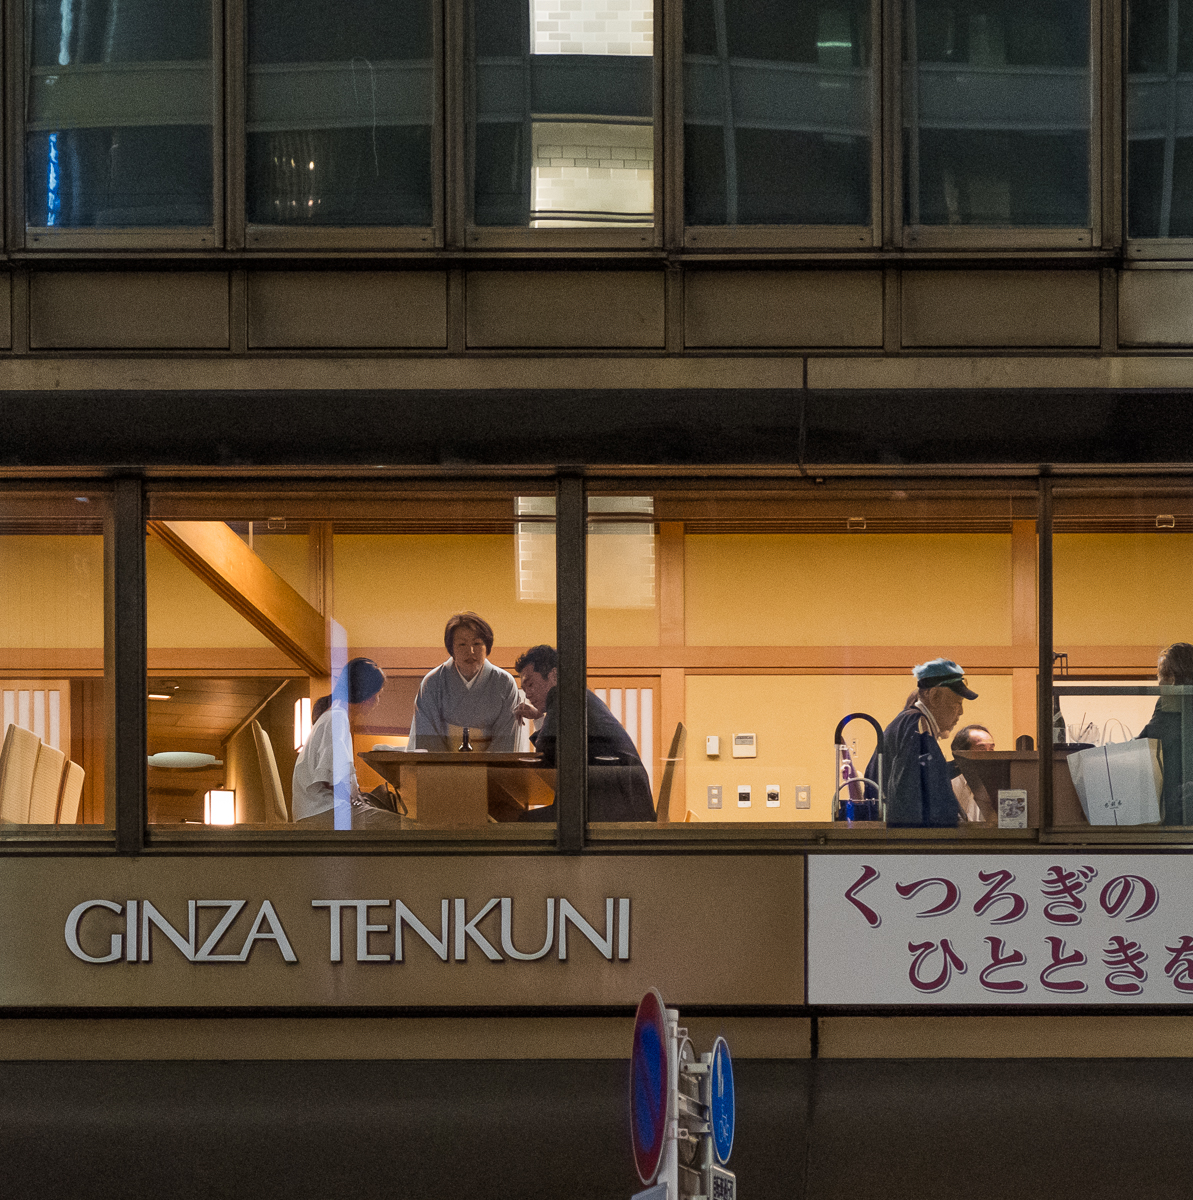 Ginza Tenkuni, Tokyo, Japan (2017)